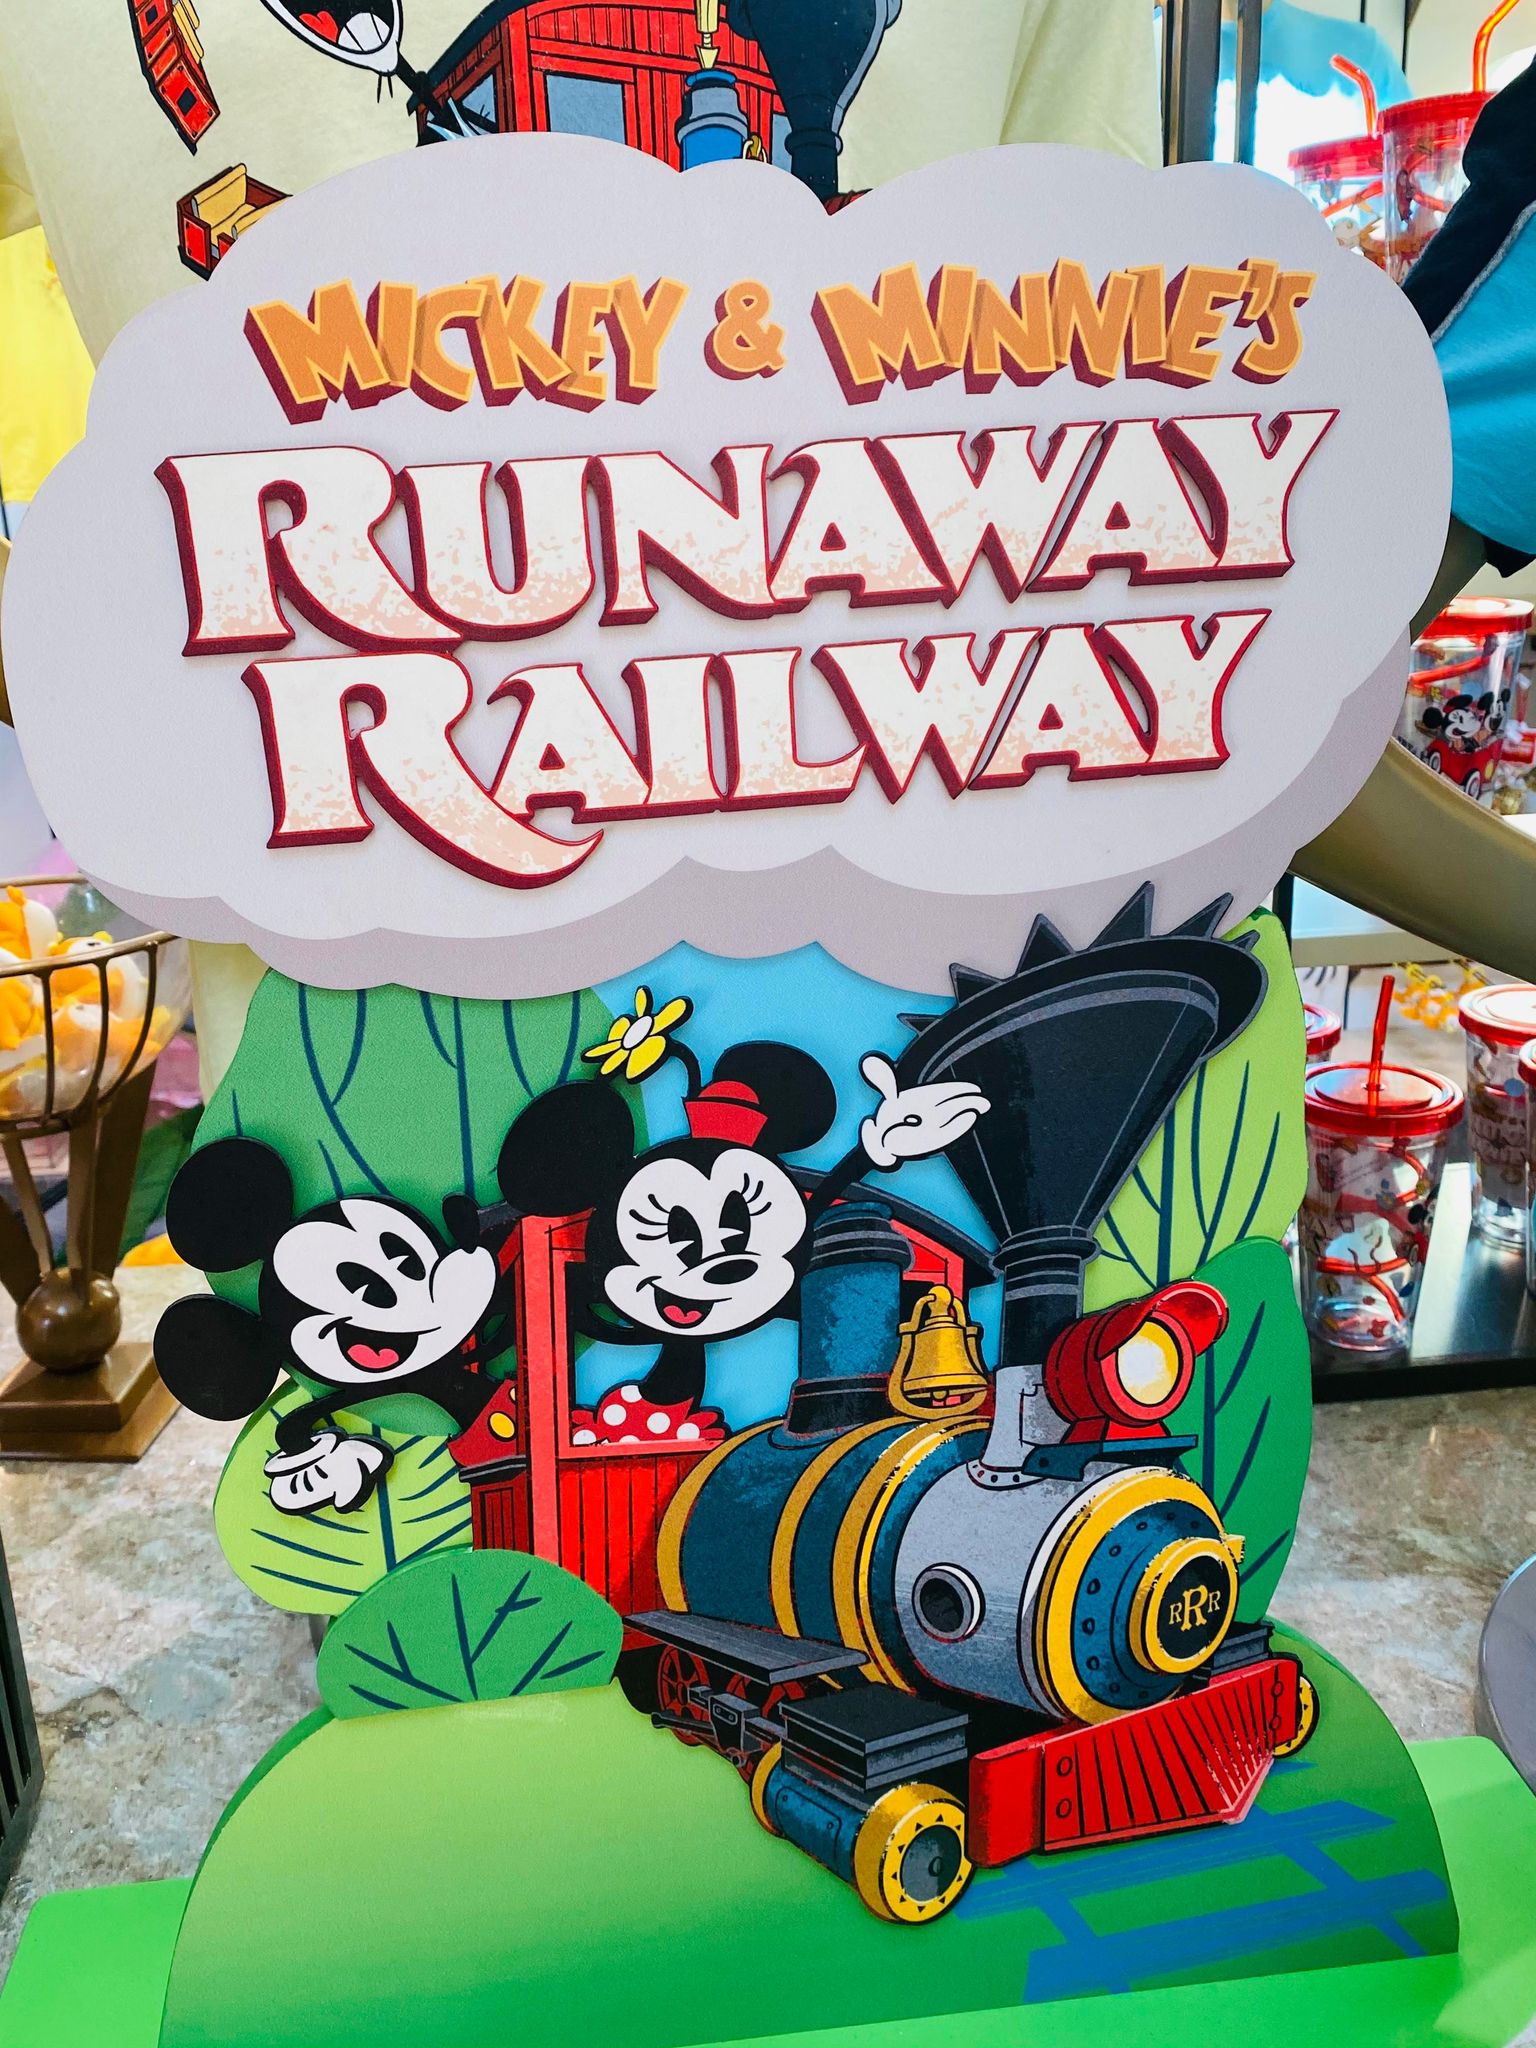 Runaway Railway Disneyland